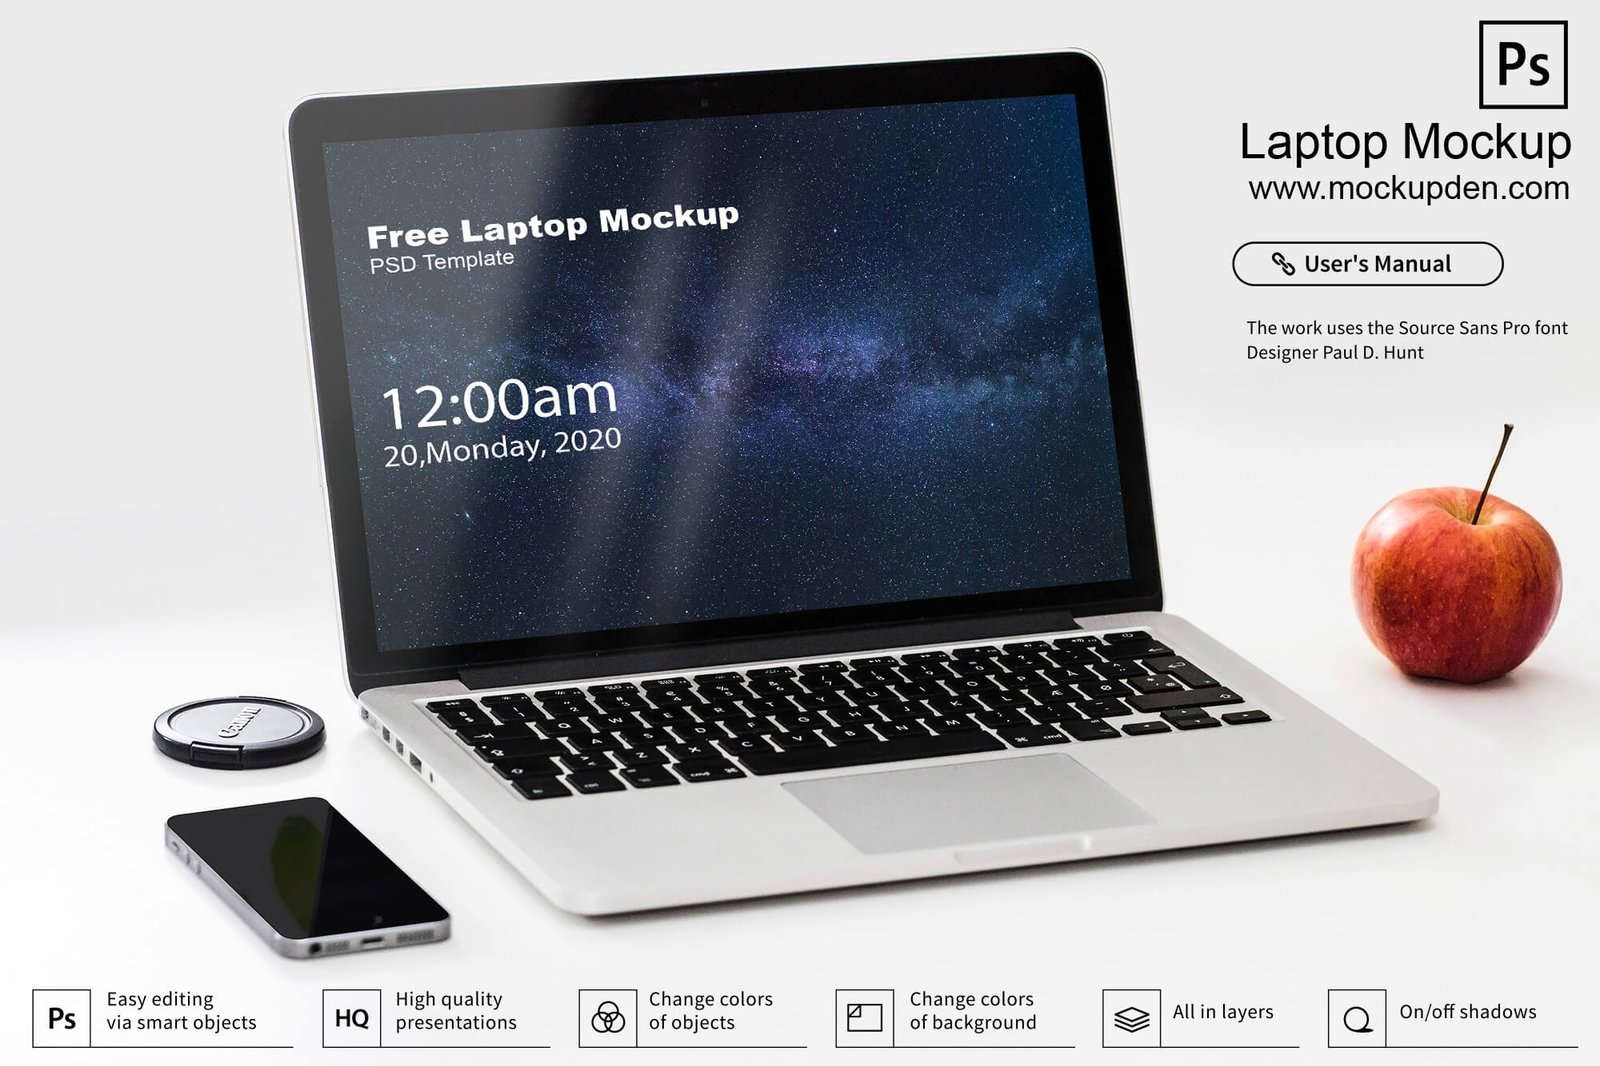 Free Laptop Mockup PSD Template